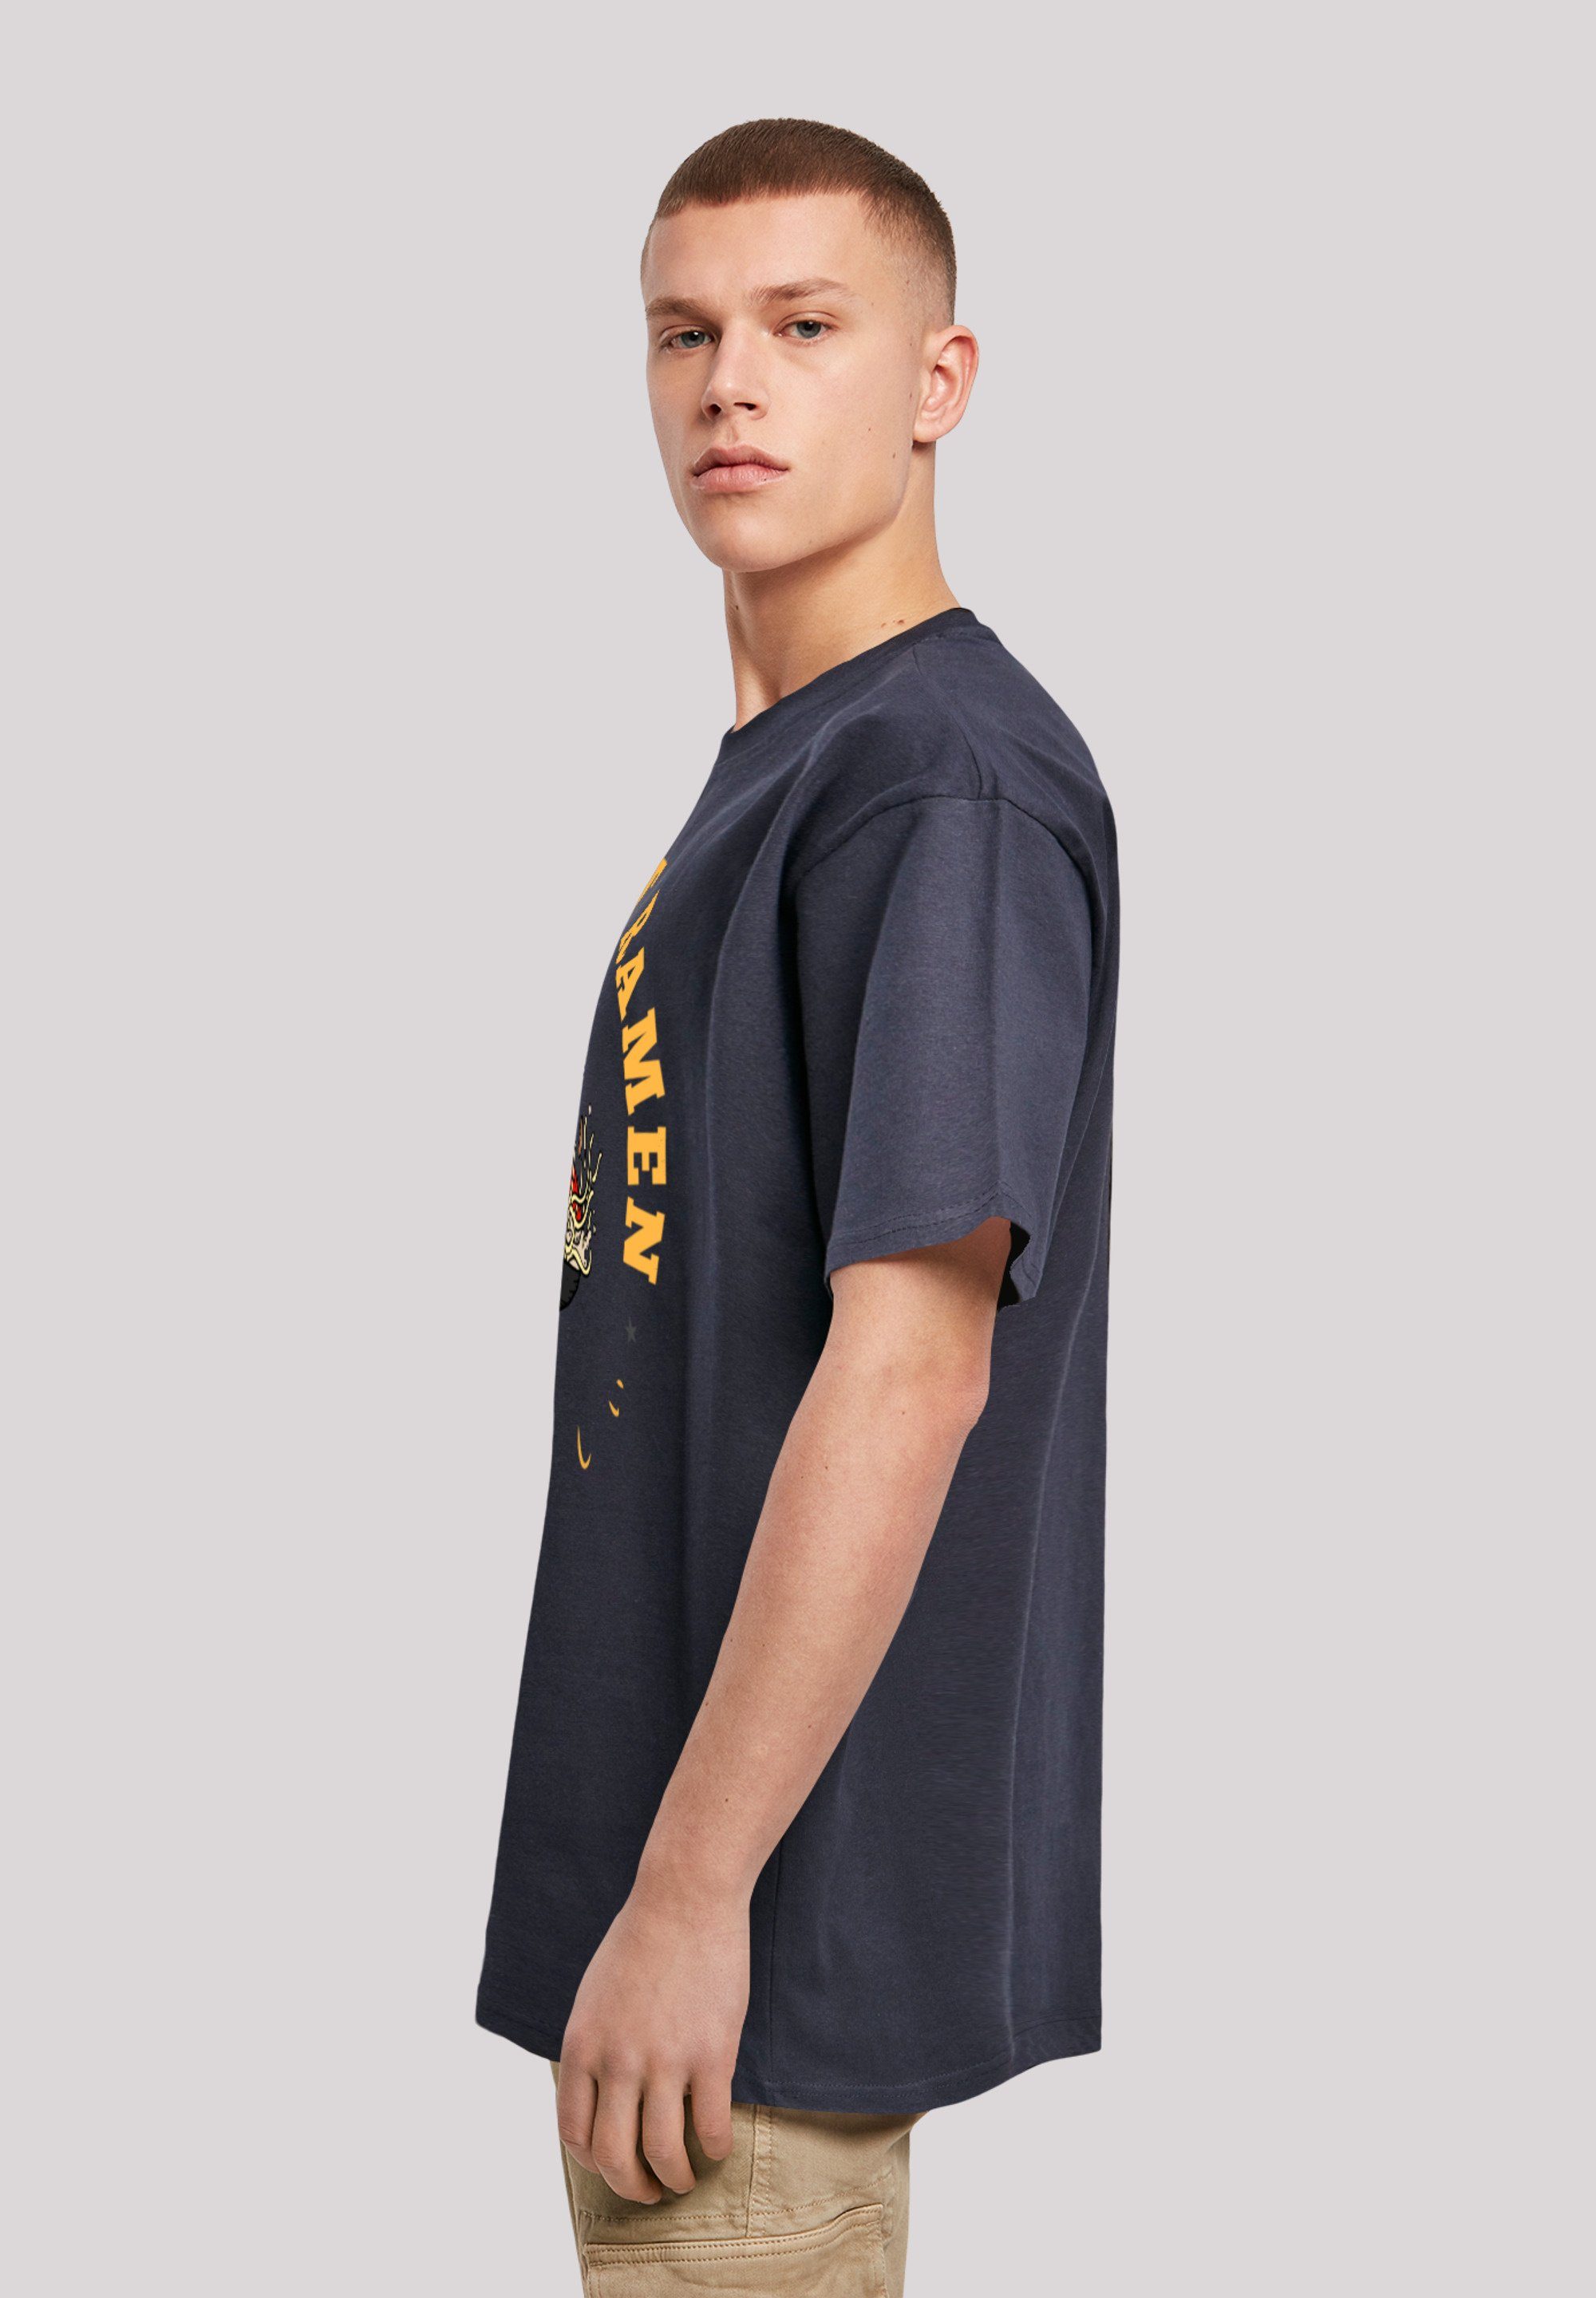 Lets F4NT4STIC Ramen get navy T-Shirt Print